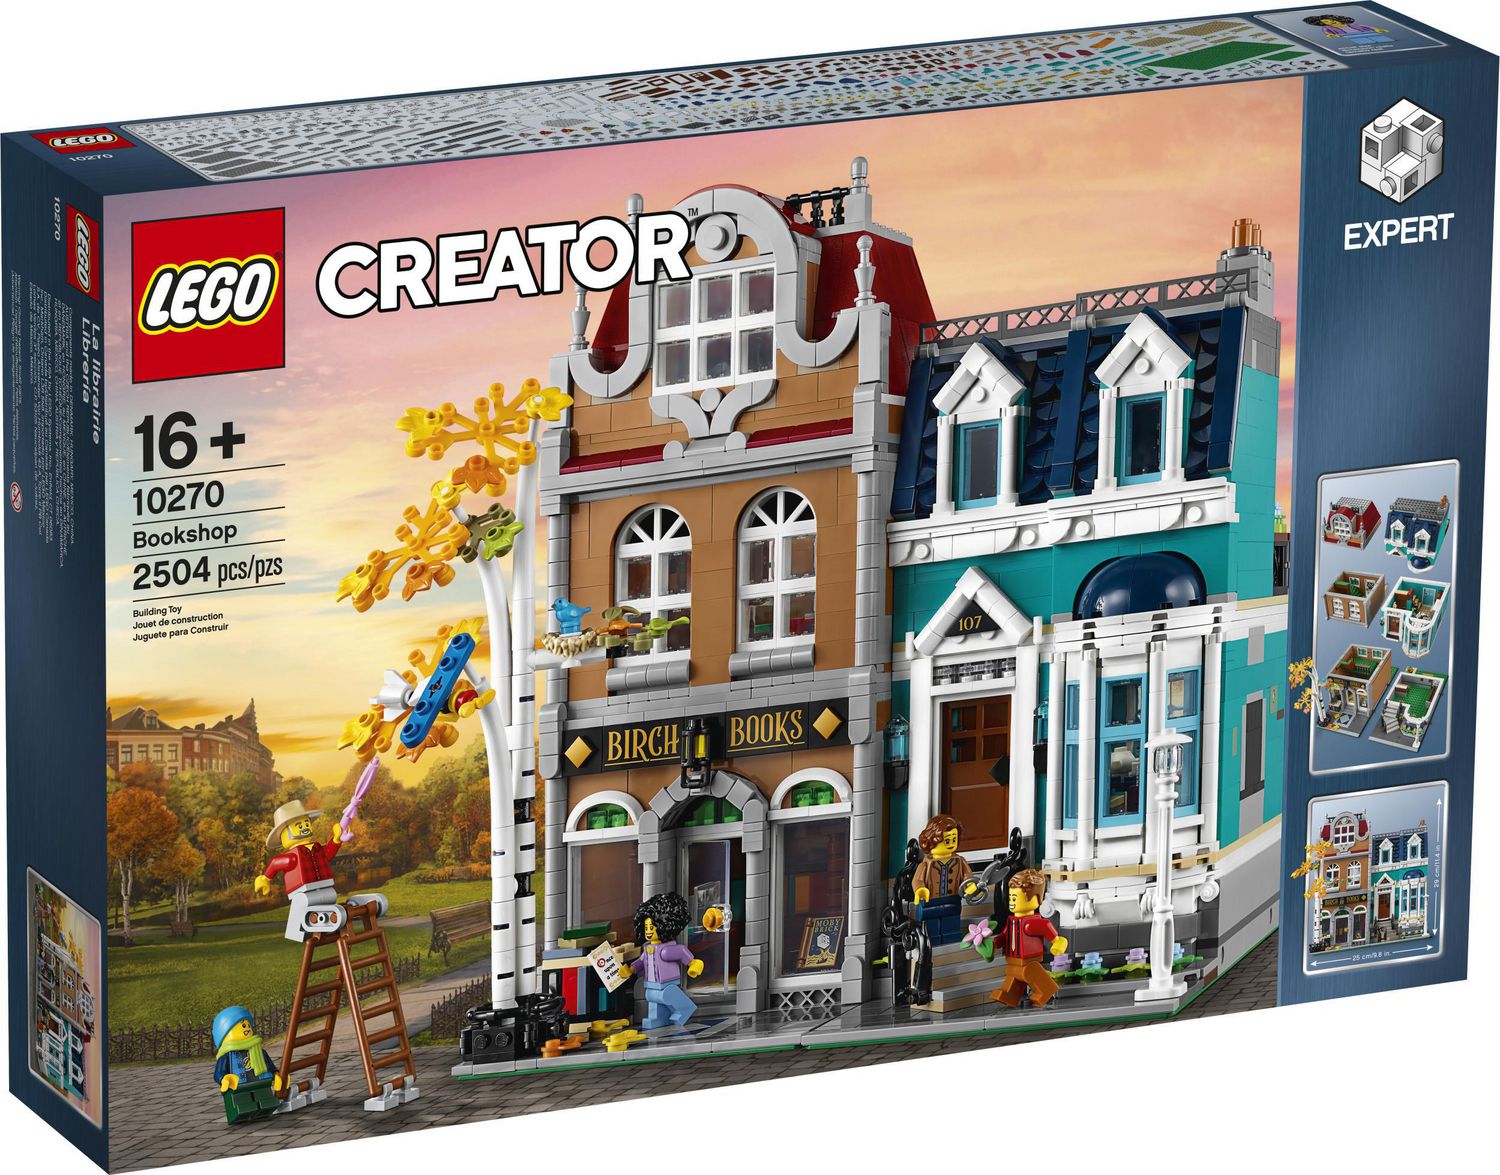 LEGO Creator Expert Bookshop 10270 Toy Building Kit (2,504 Pieces)